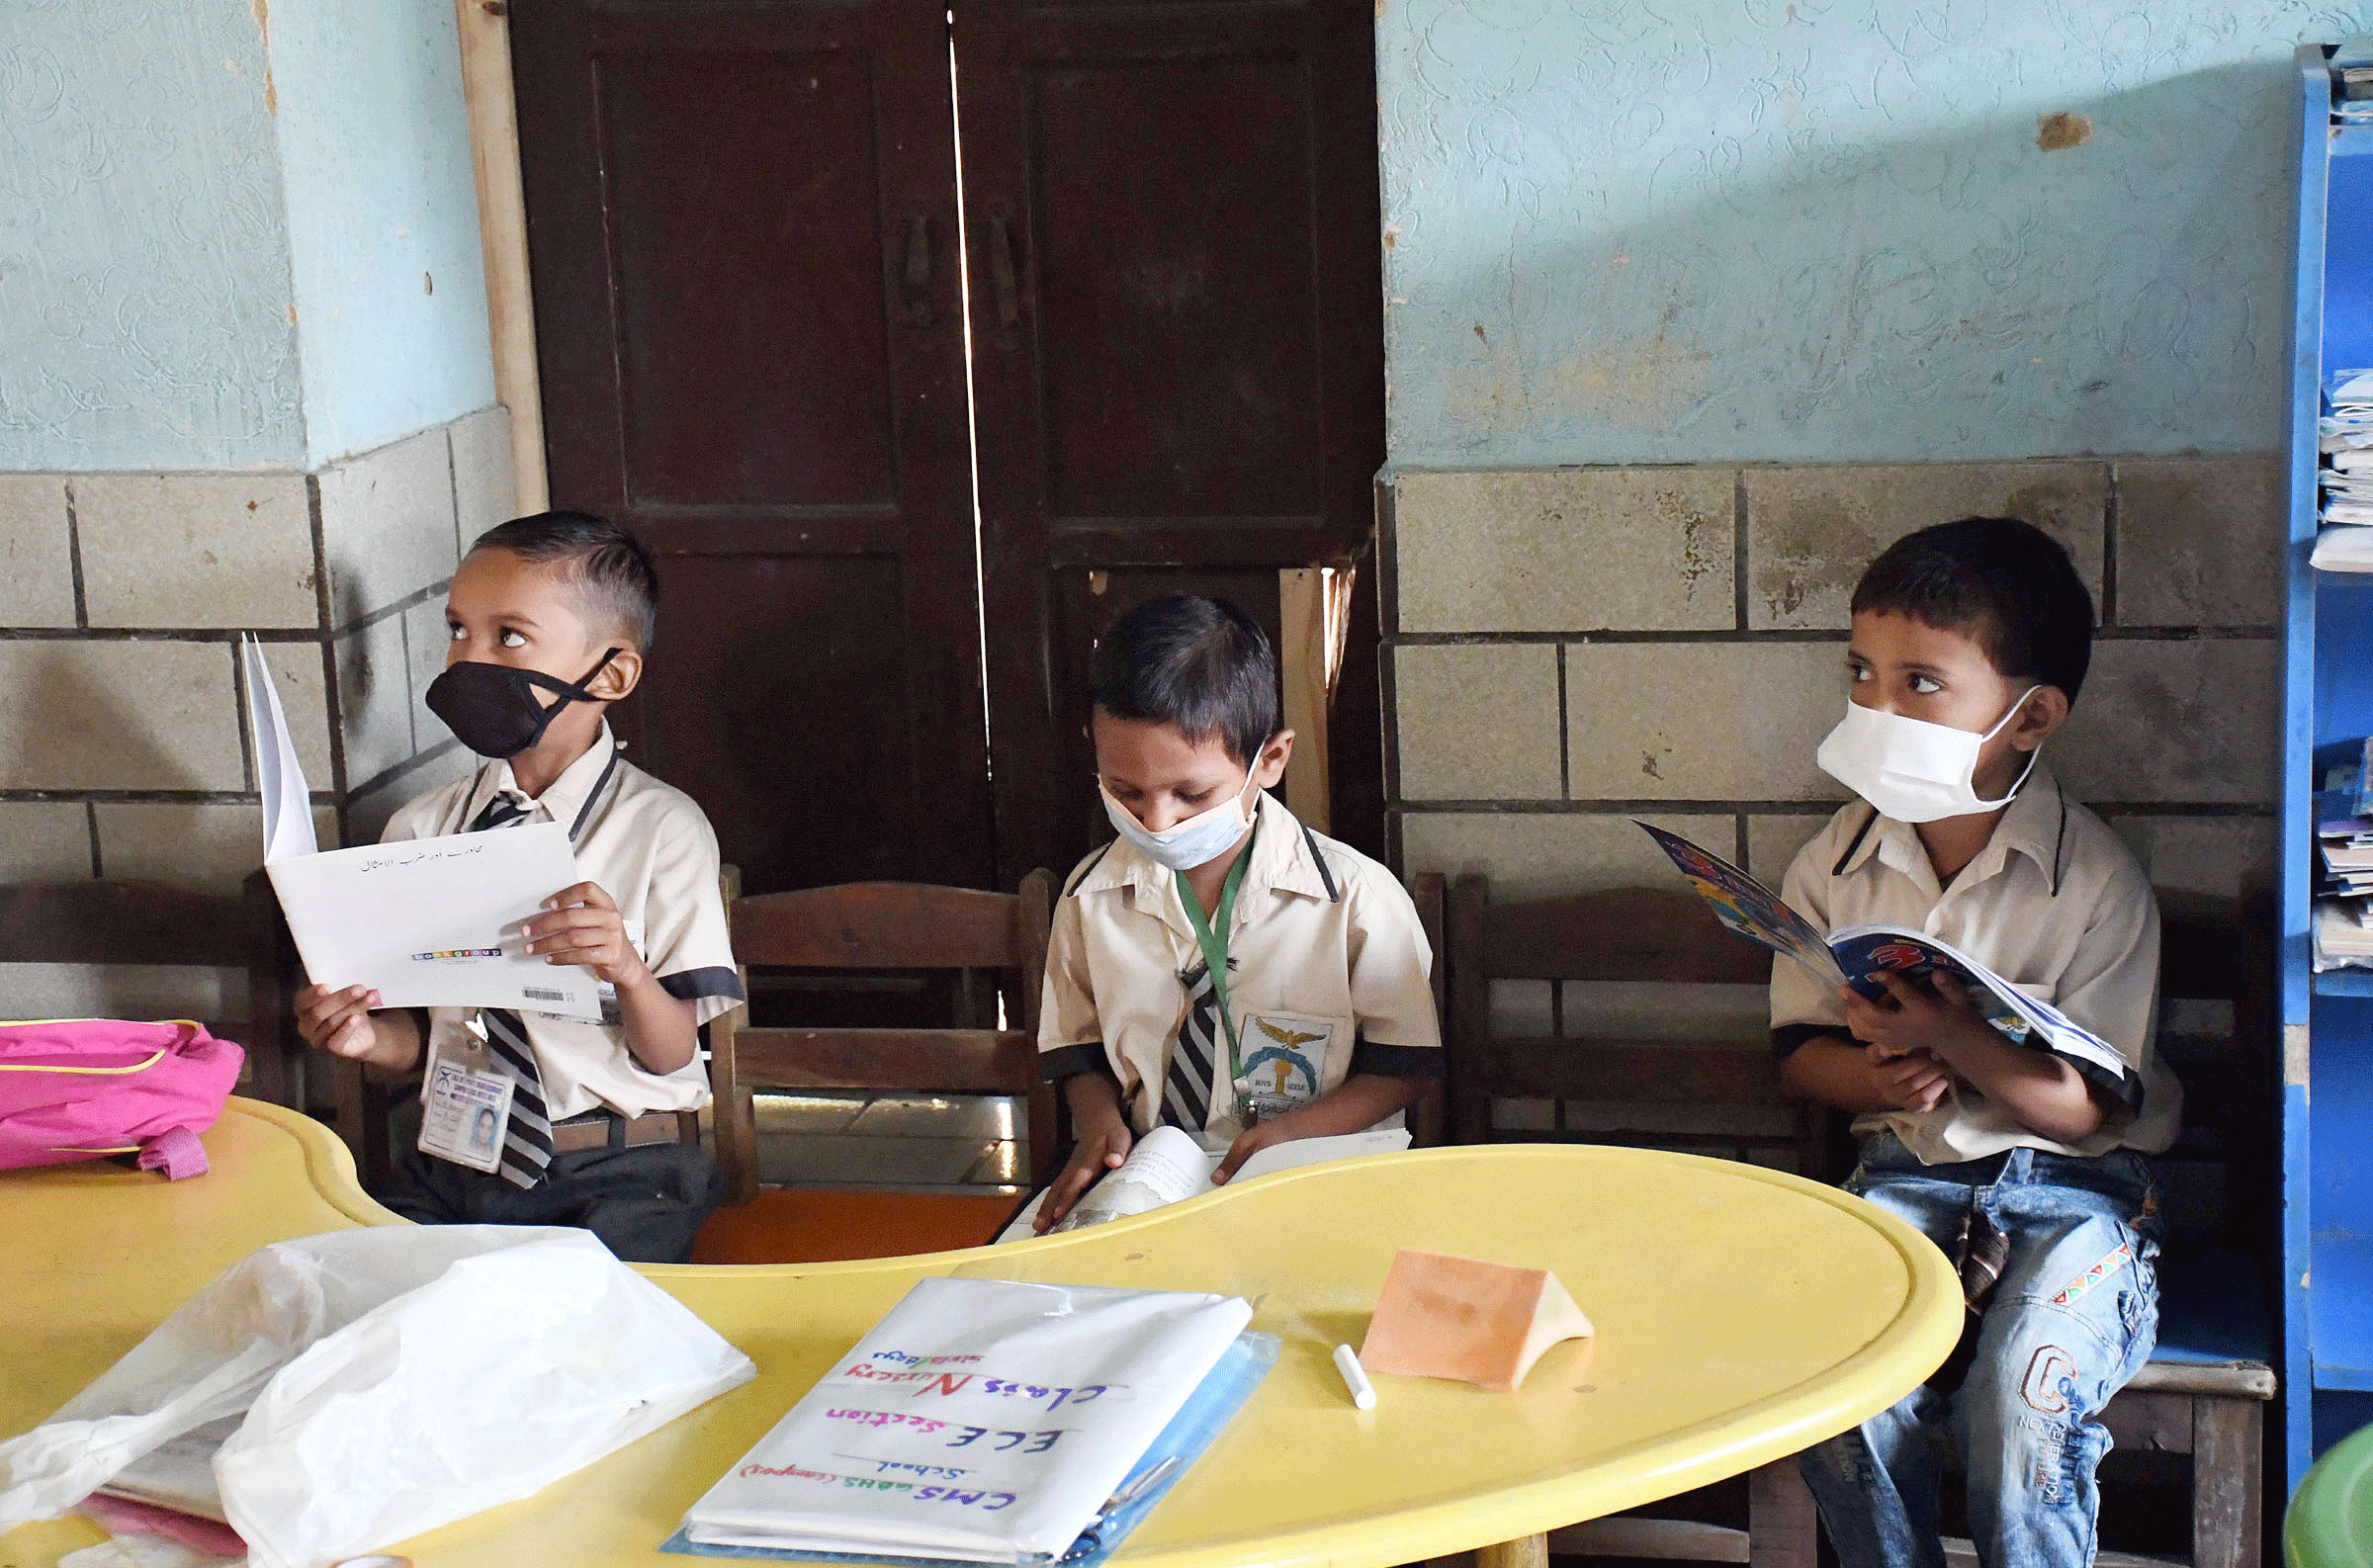 Primary schools across Pakistan to resume classes on Wednesday: minister